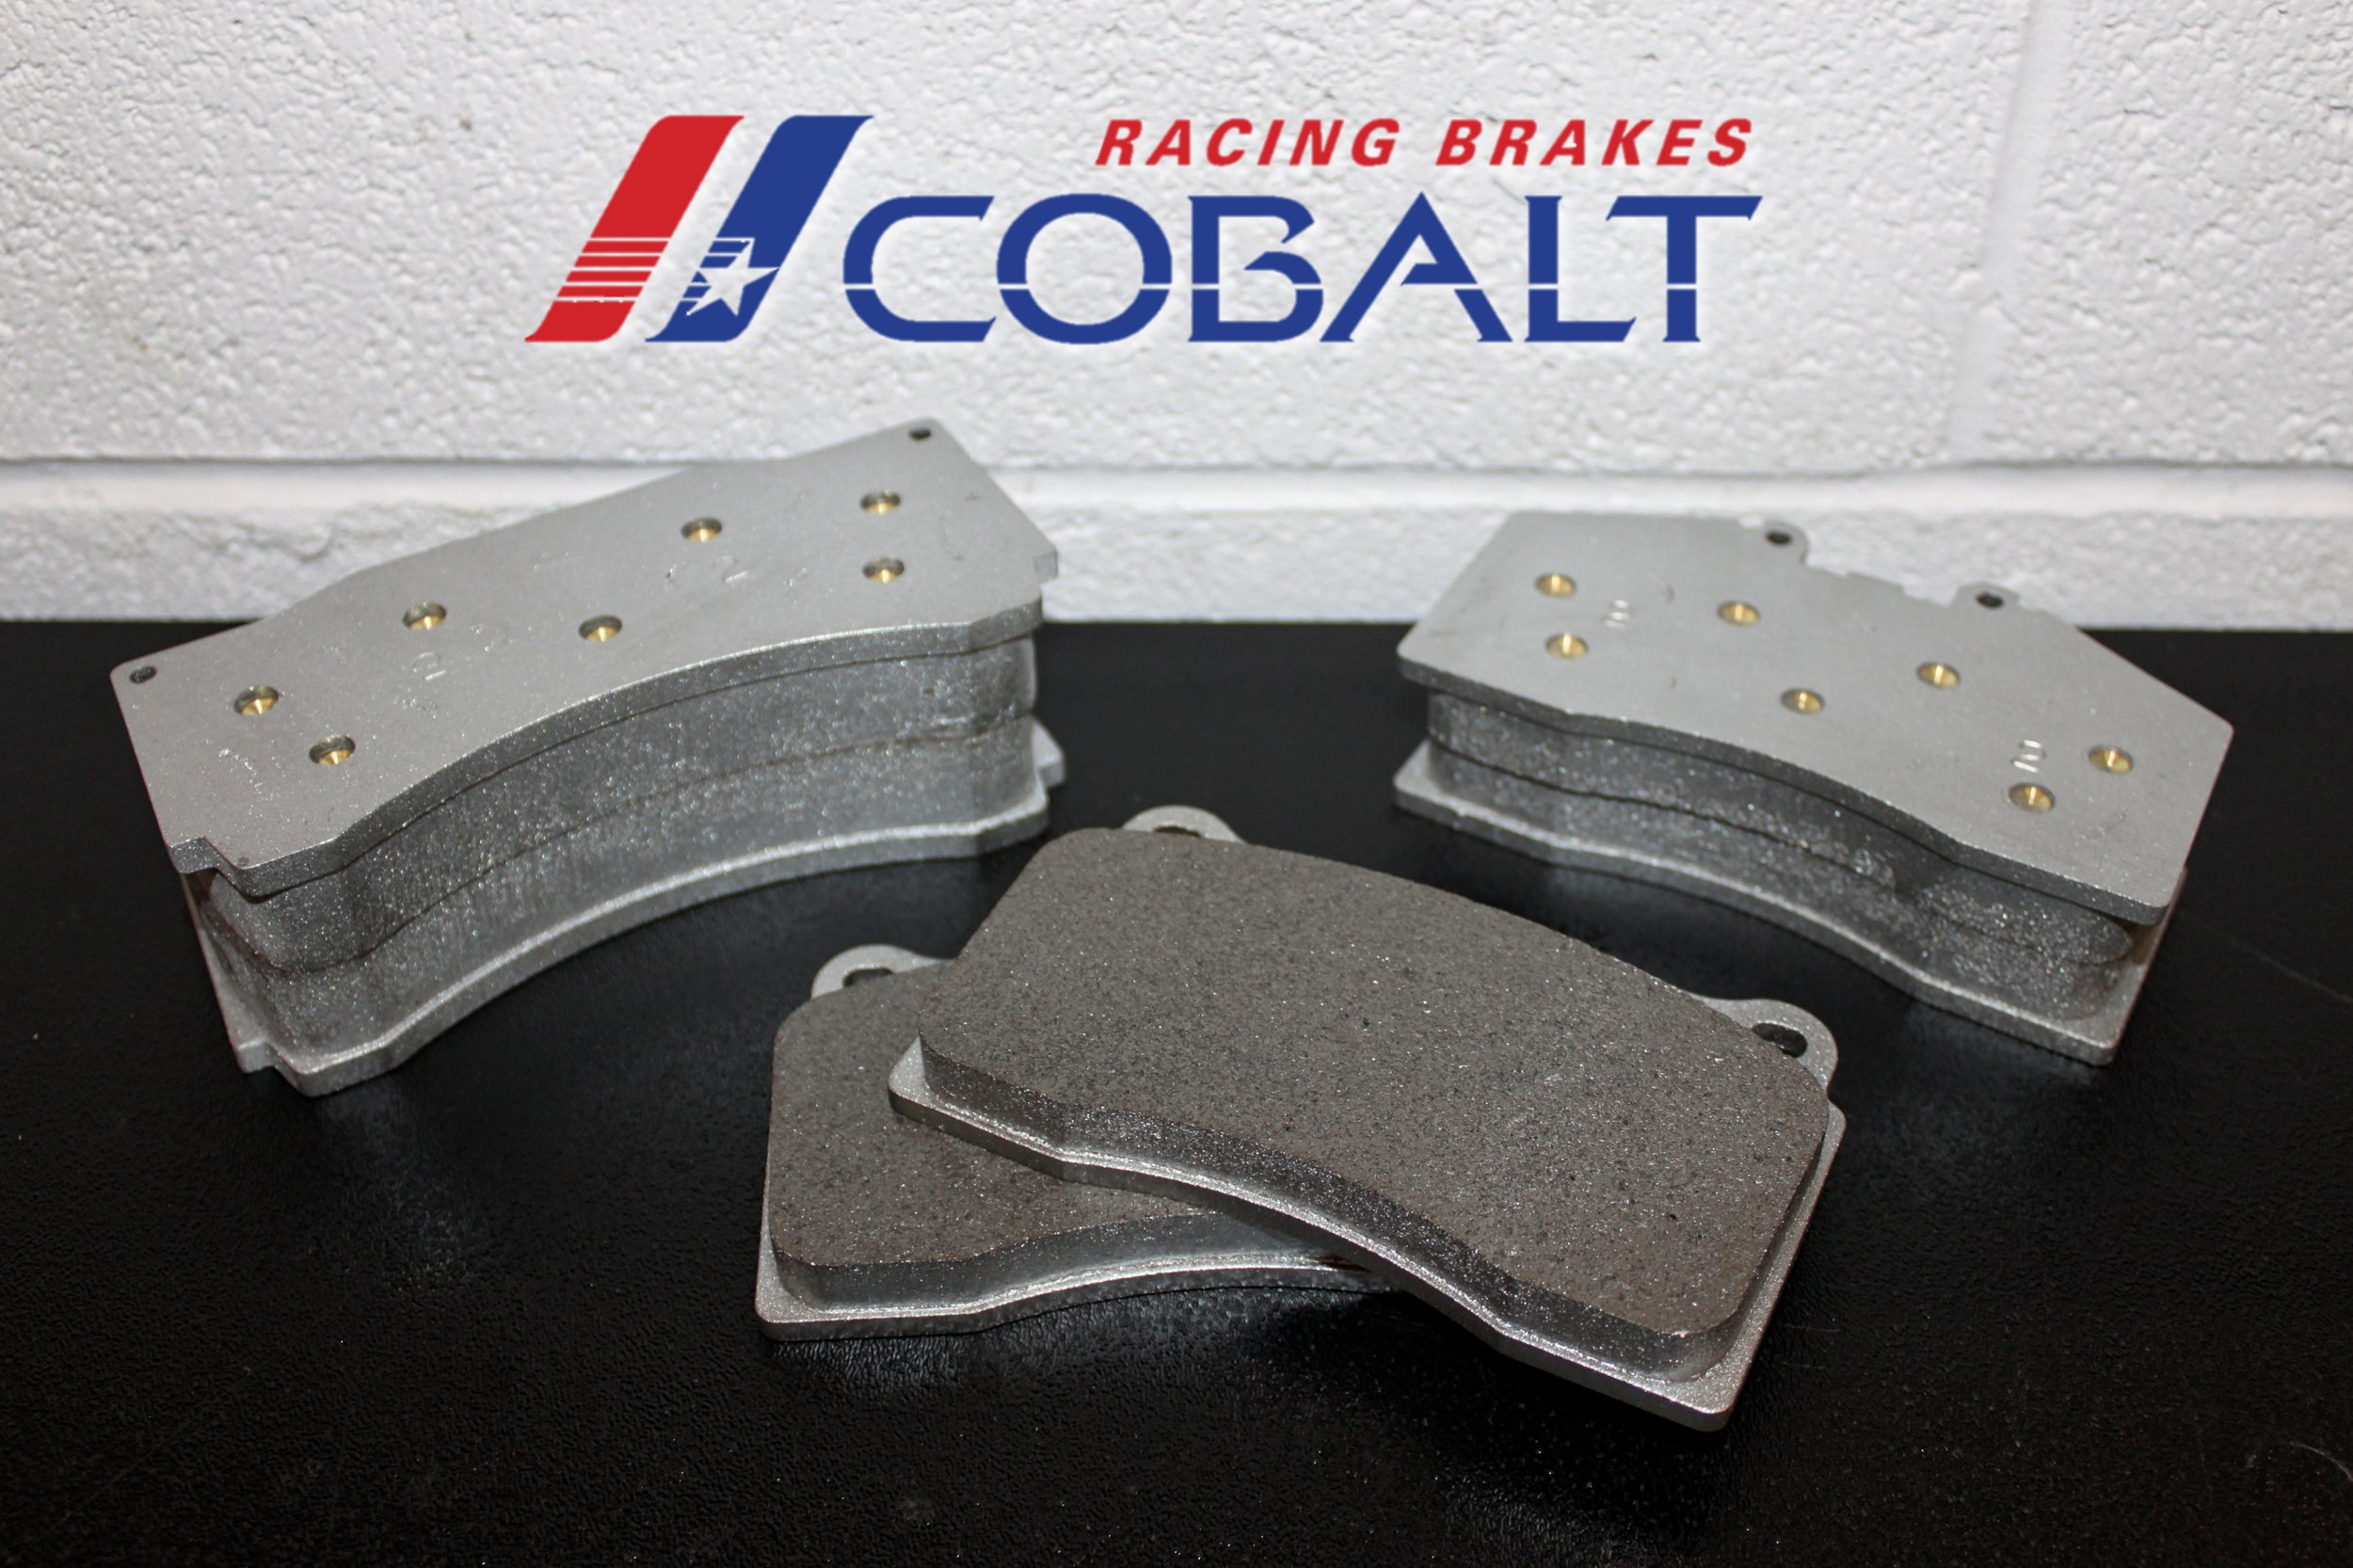 Cobalt Racing Brakes - High Performance Brake Pad Technology